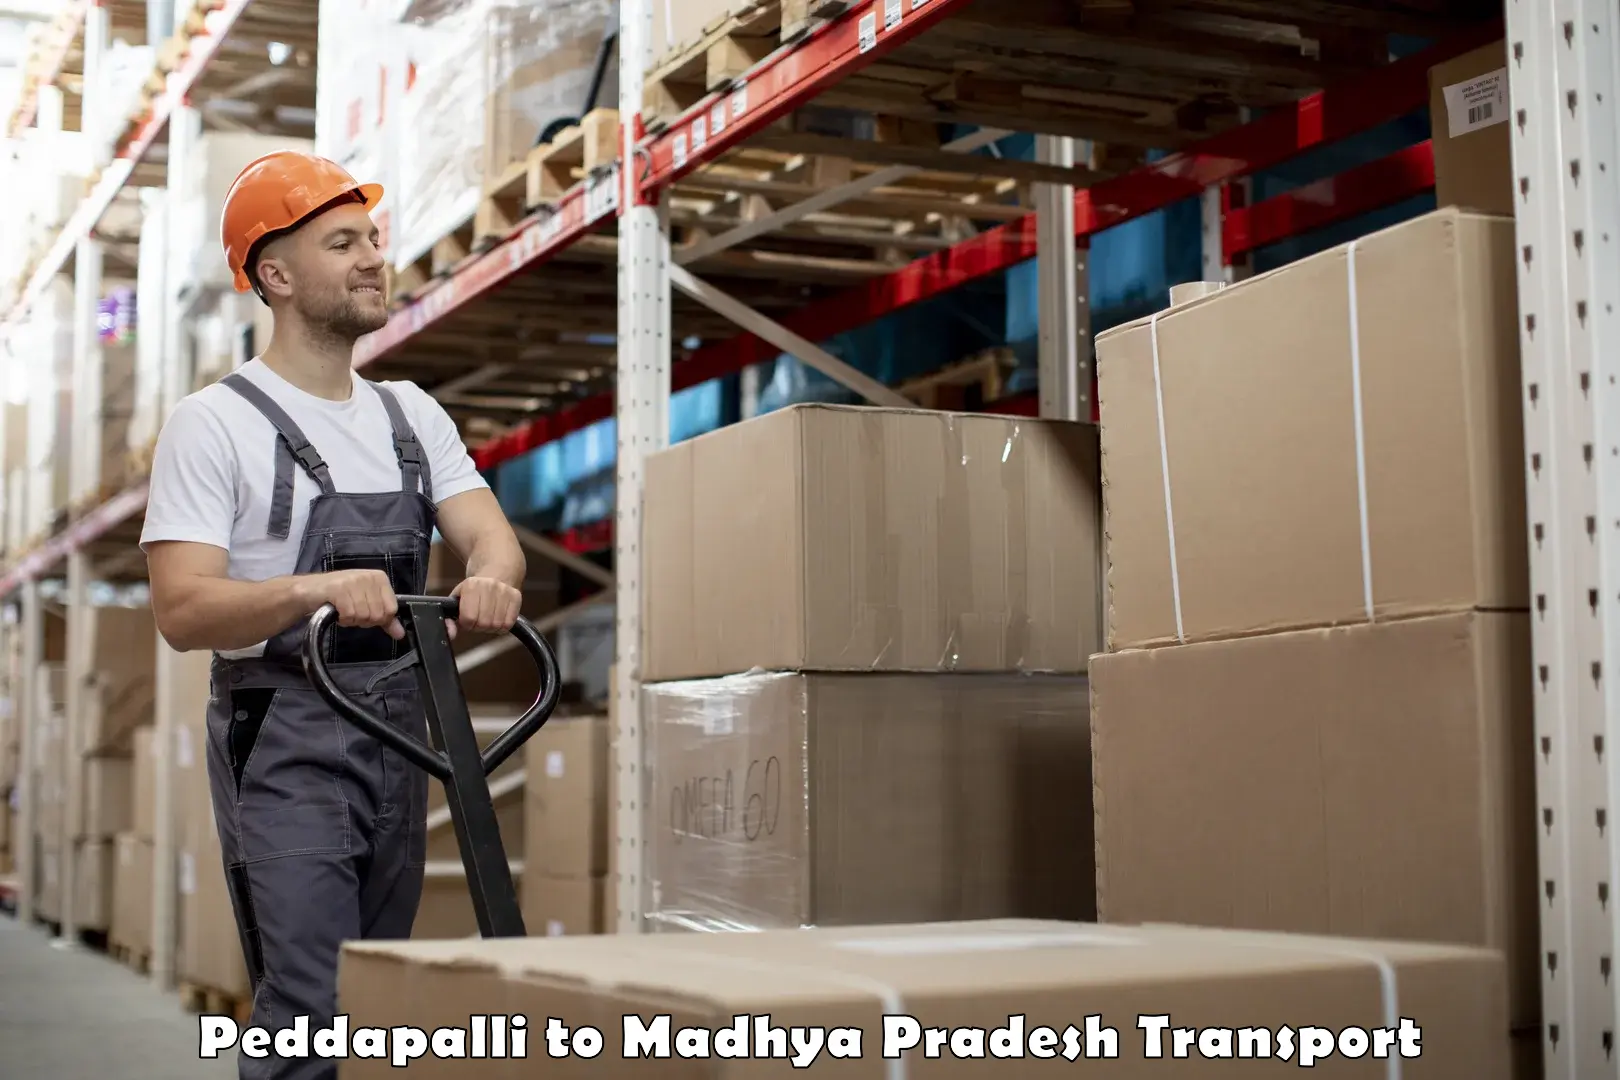 Delivery service Peddapalli to Rampur Naikin